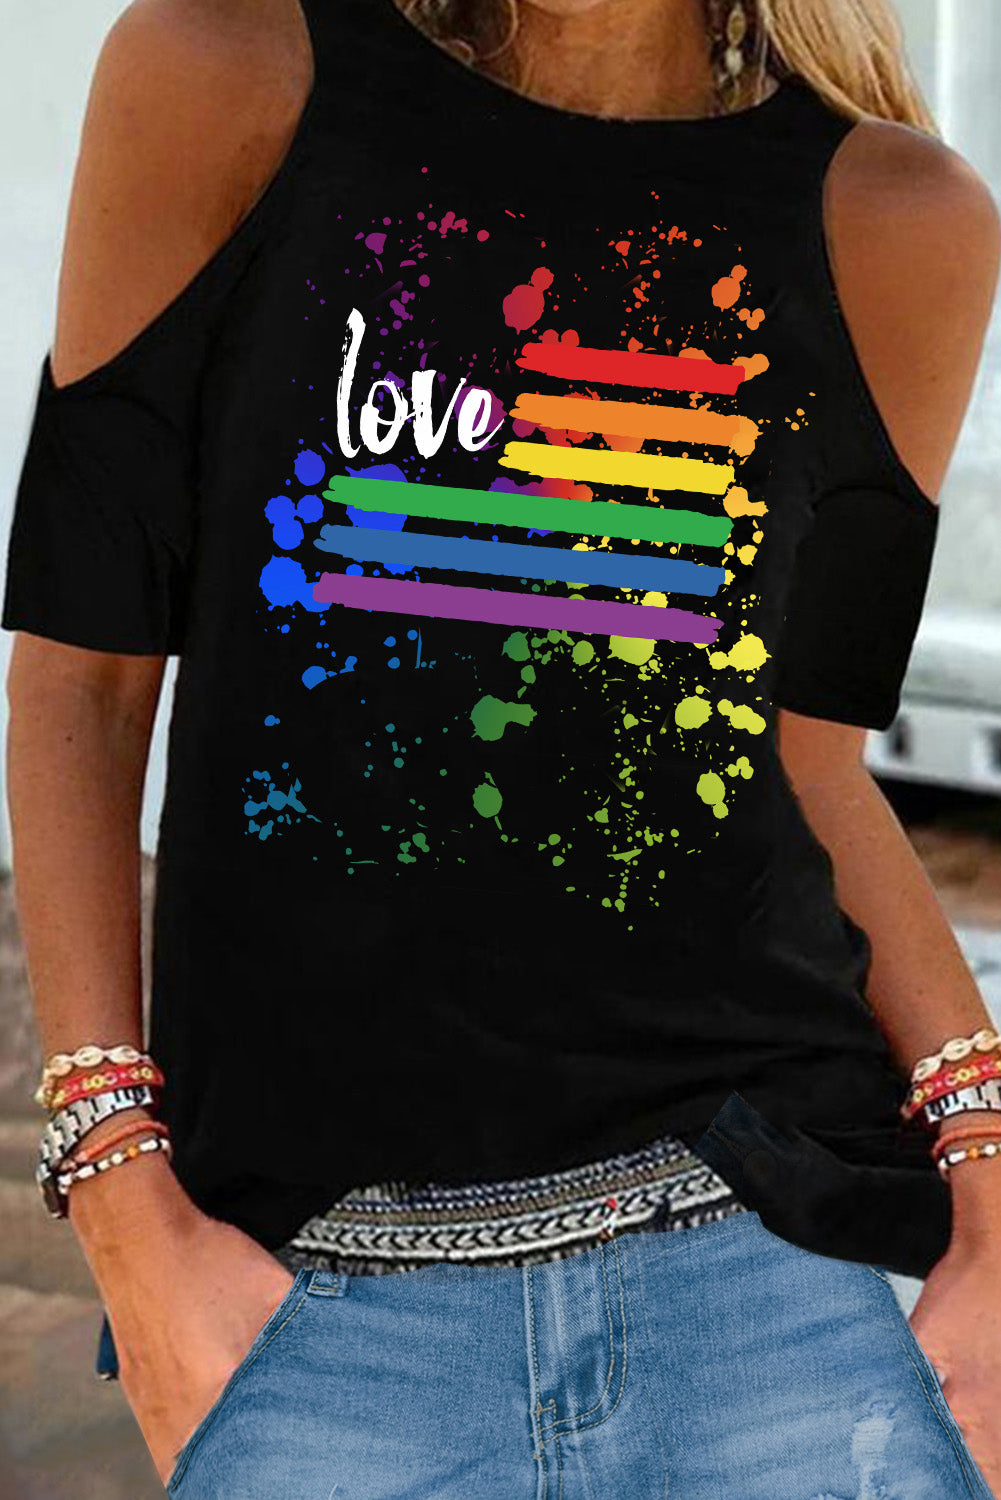 LC25216655-2-S, LC25216655-2-M, LC25216655-2-L, LC25216655-2-XL, LC25216655-2-2XL, Black Women's Love Rainbow Top Cold Shoulder Tee Short Sleeve T-Shirt